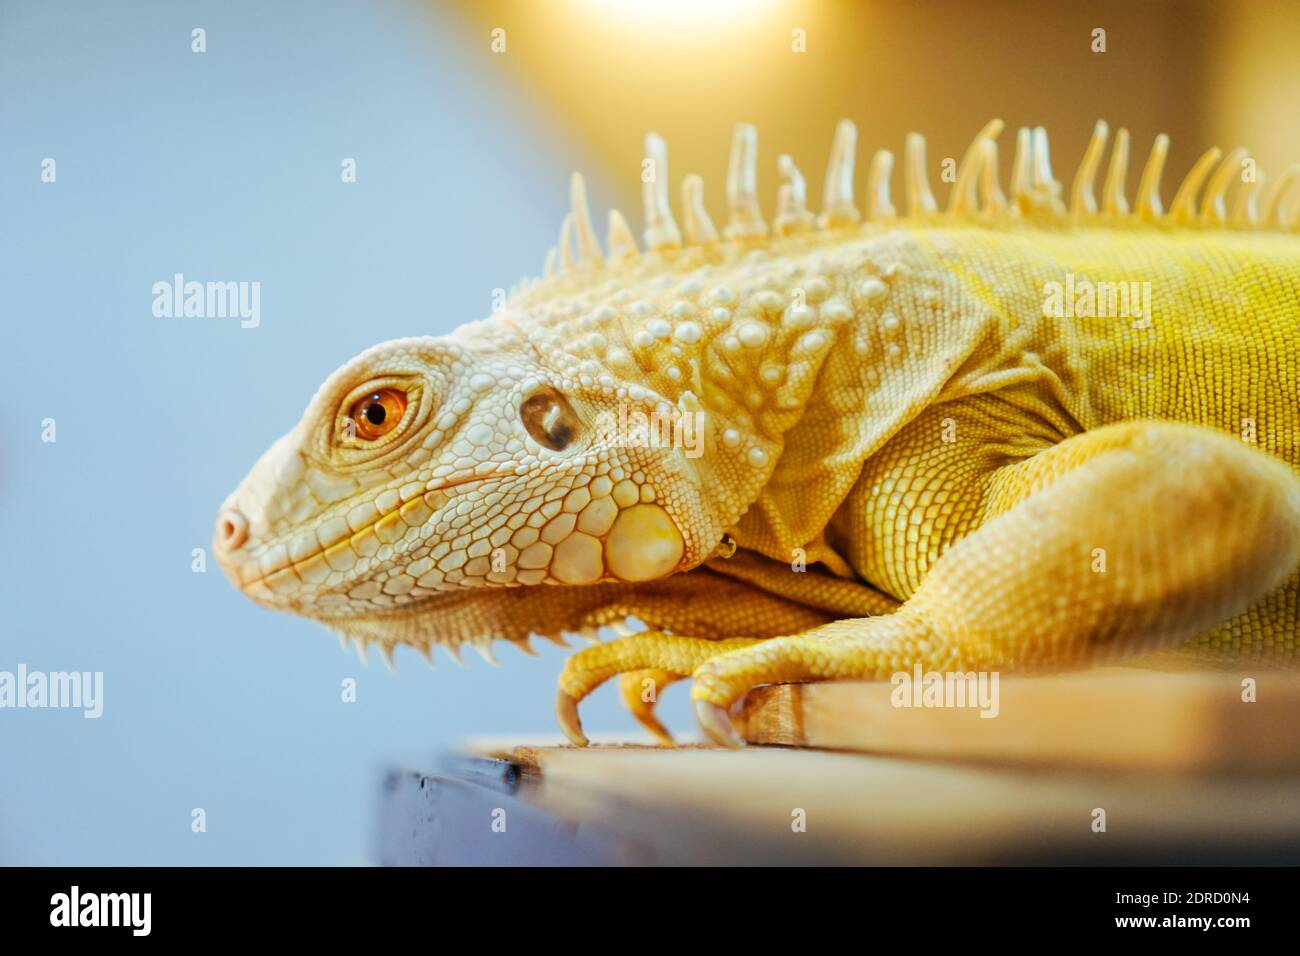 Vista de perfil de Iguana amarilla en la mesa Fotografía de stock - Alamy